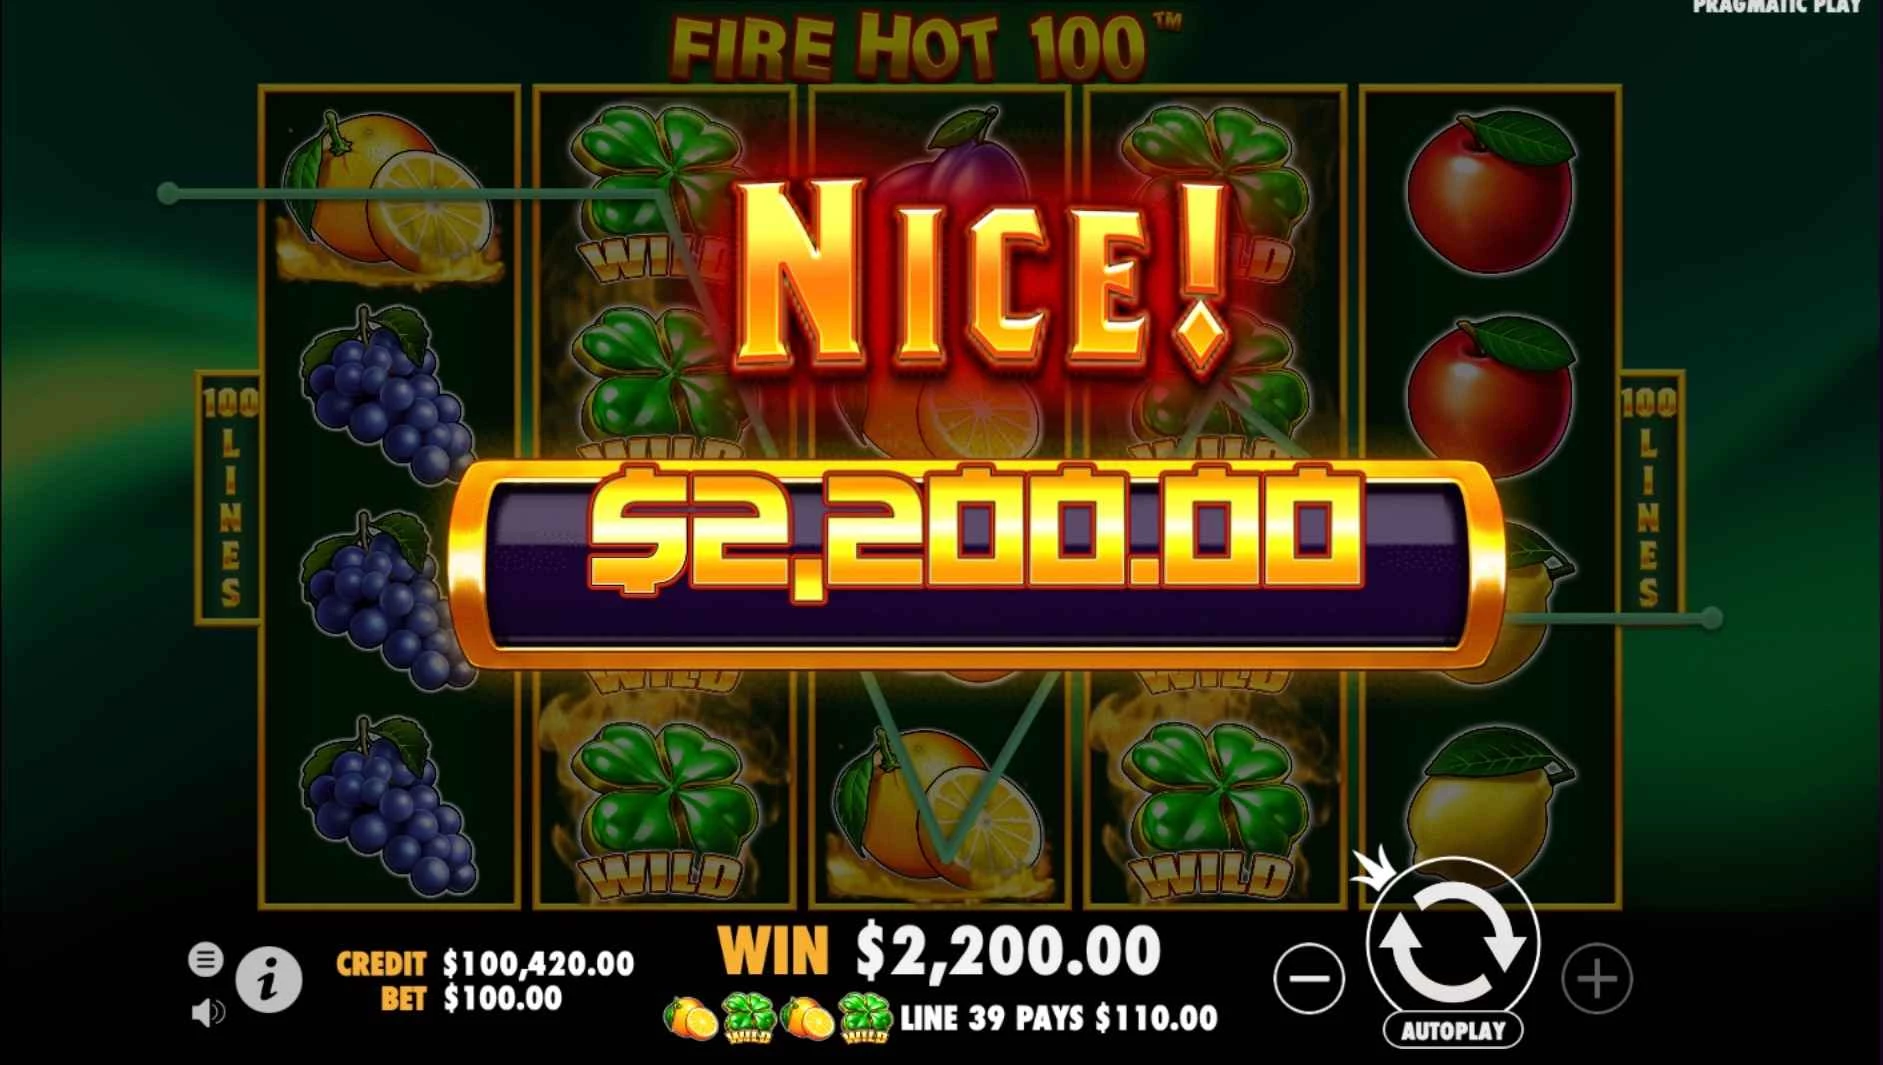 Fire Hot 100 Slot by Pragmatic Play - Big Win